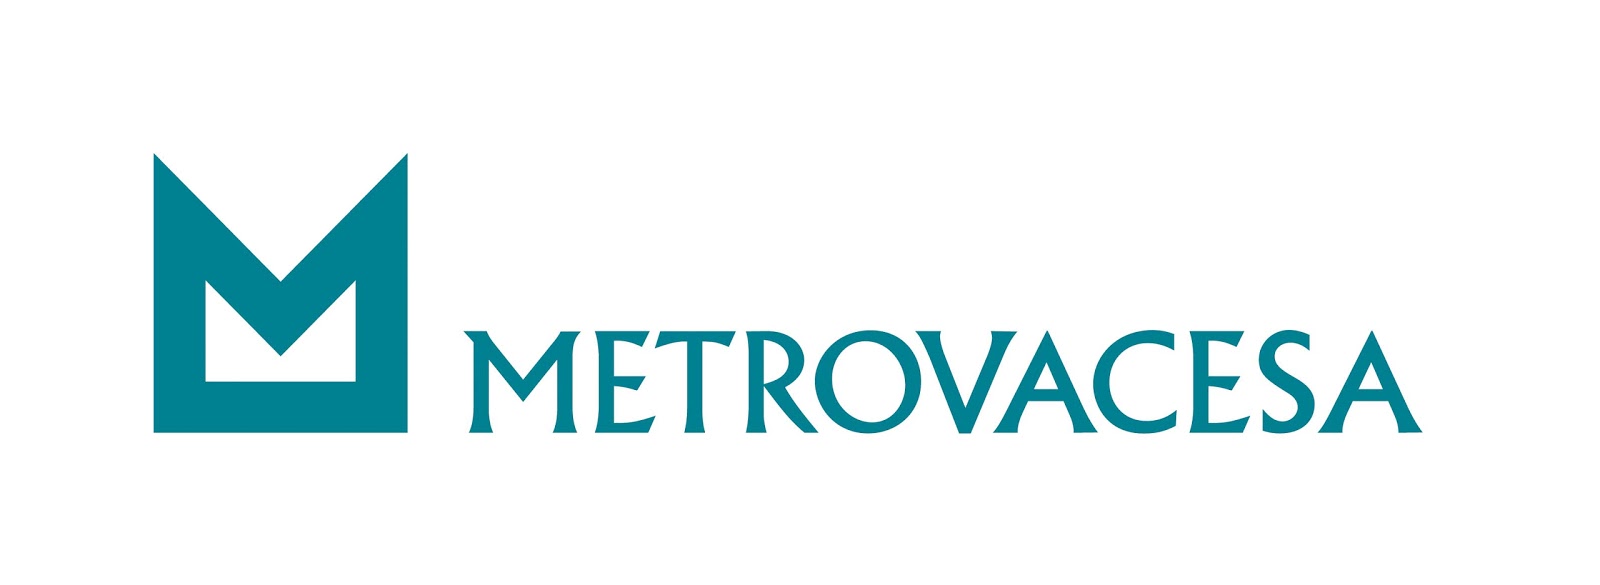 Metrovacesa Logo